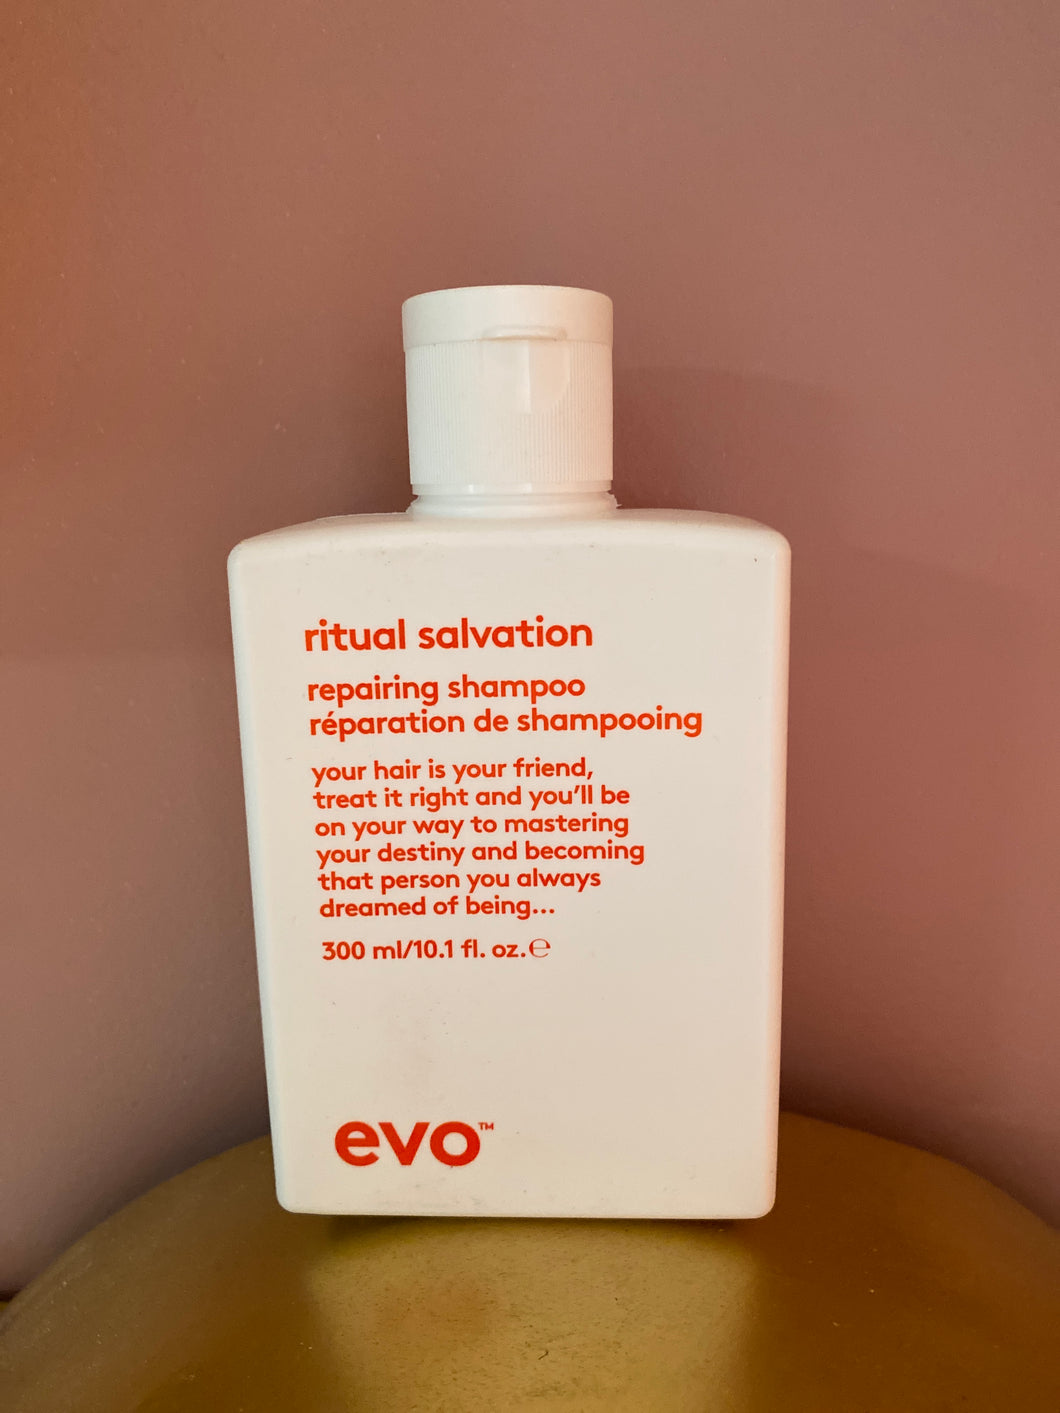 Ritual salvation shampoo